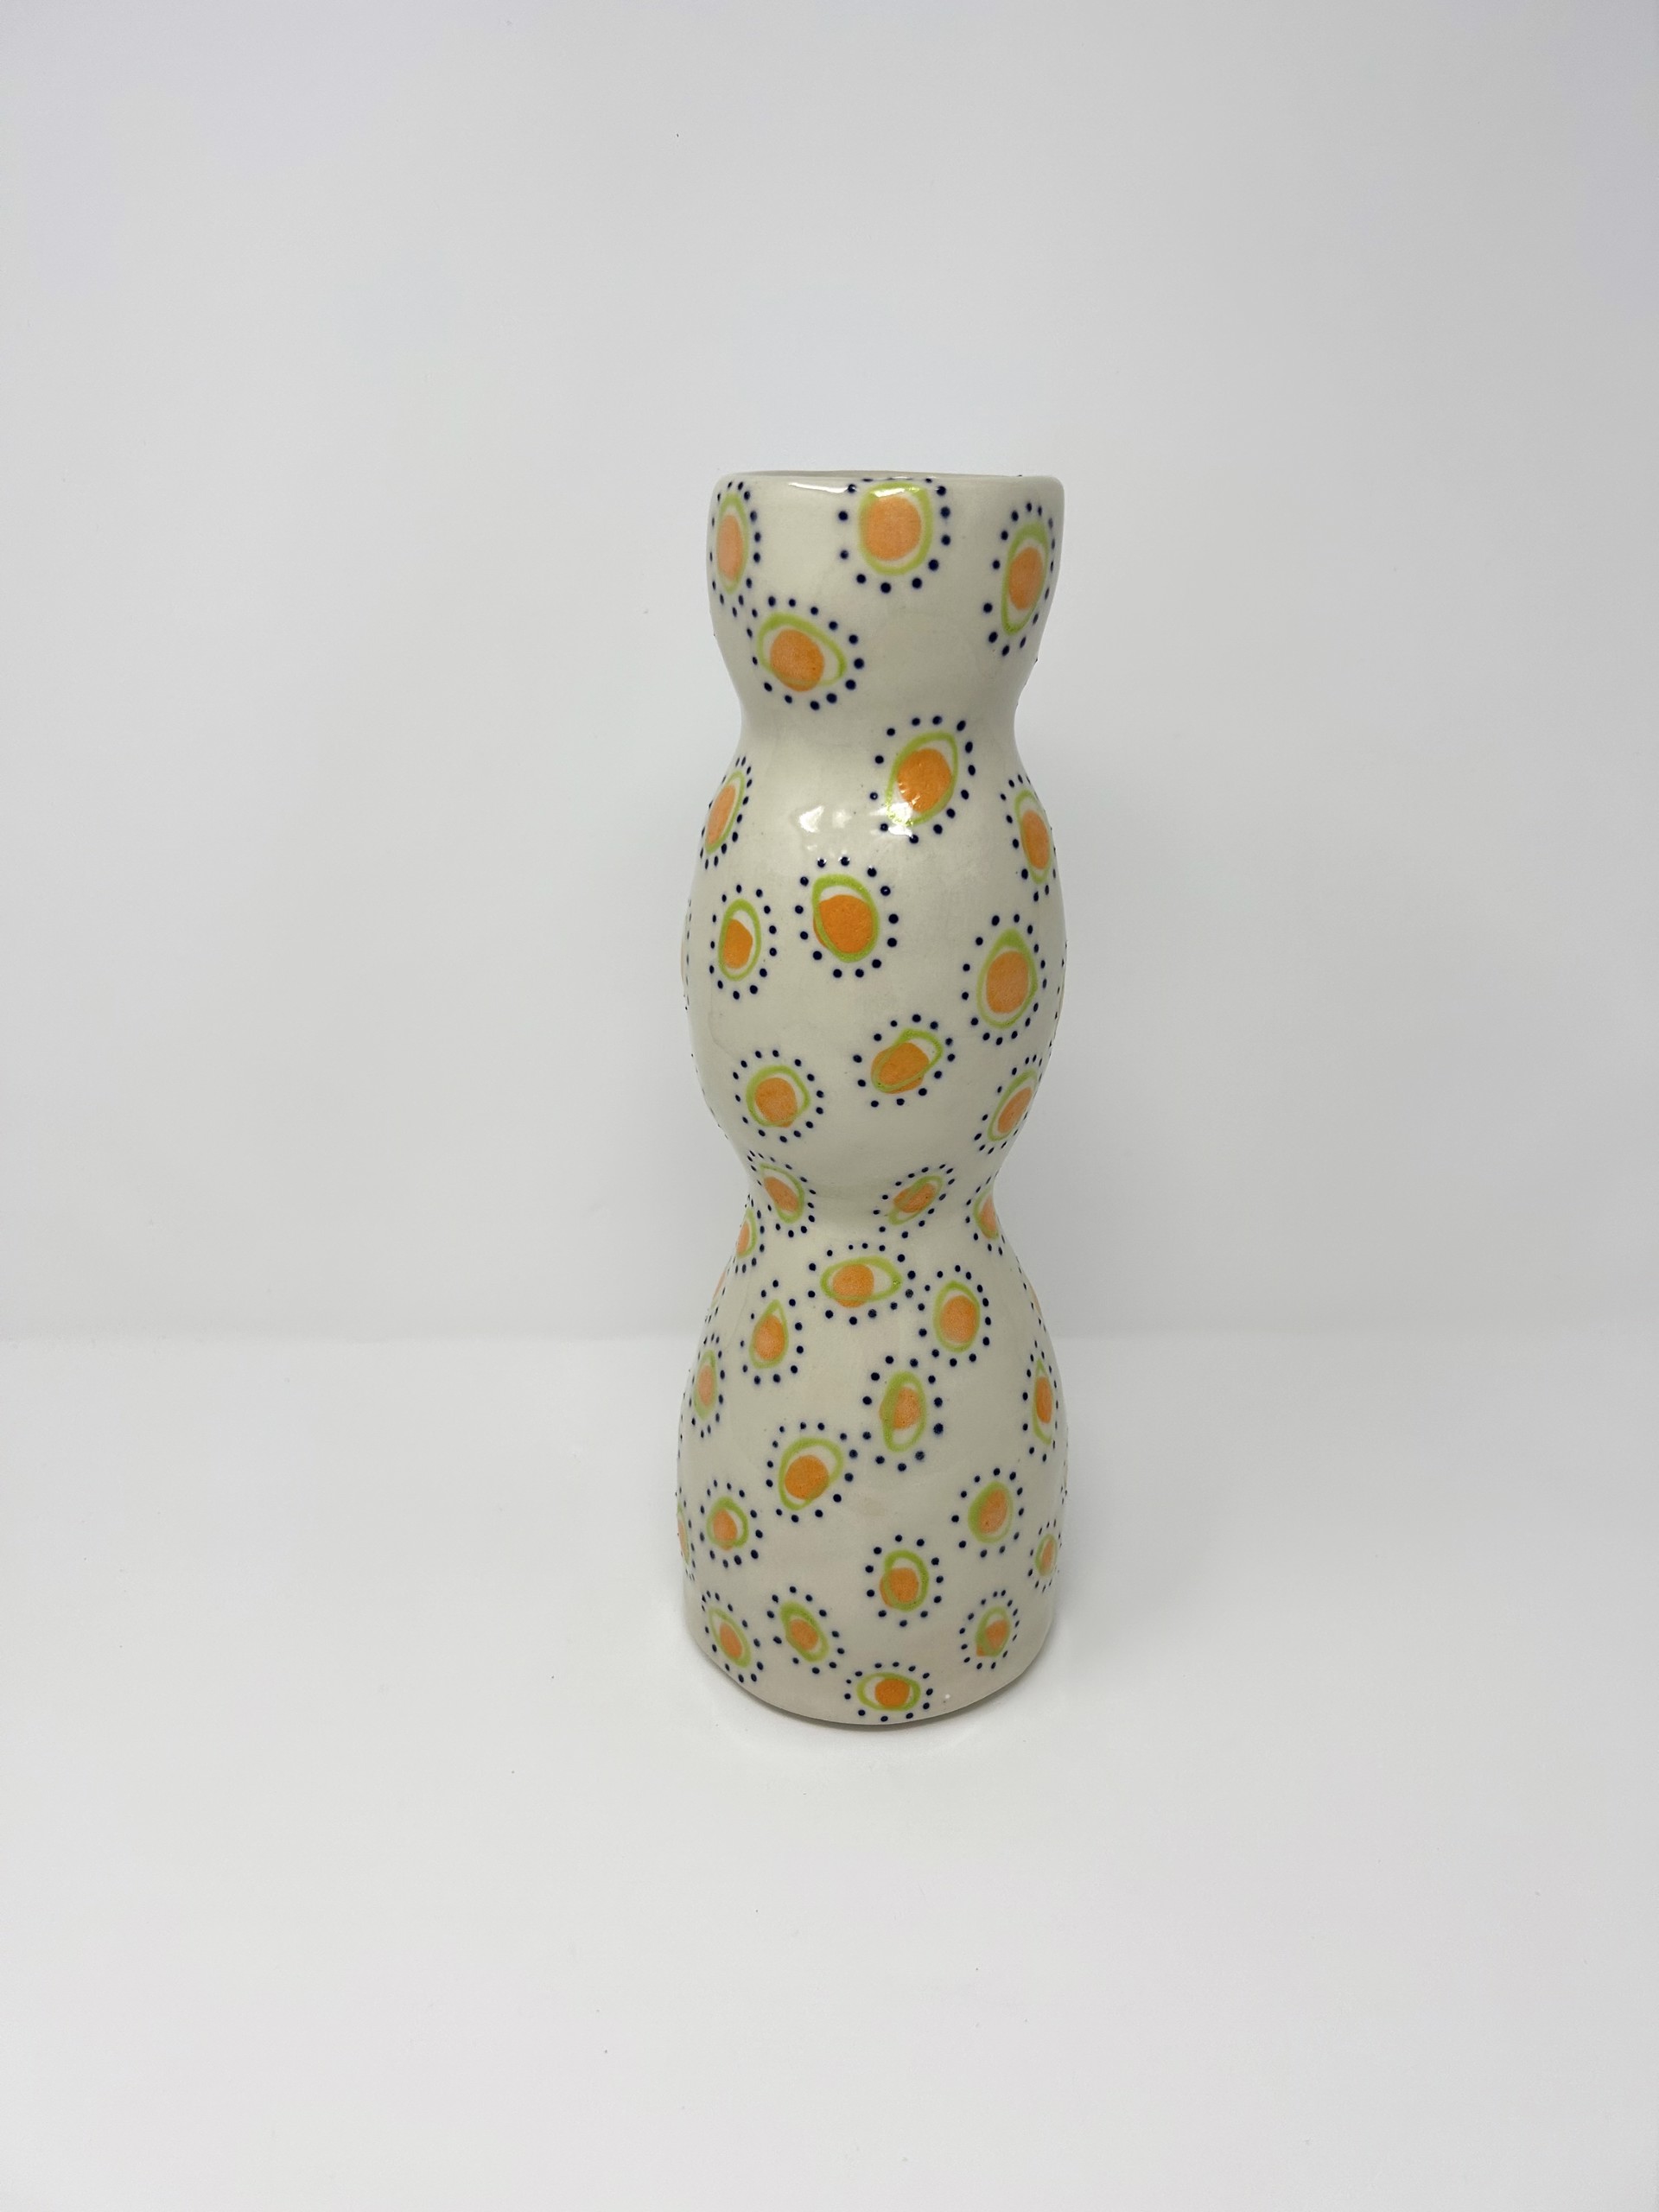 Retro Print Vase by Sam Shamard